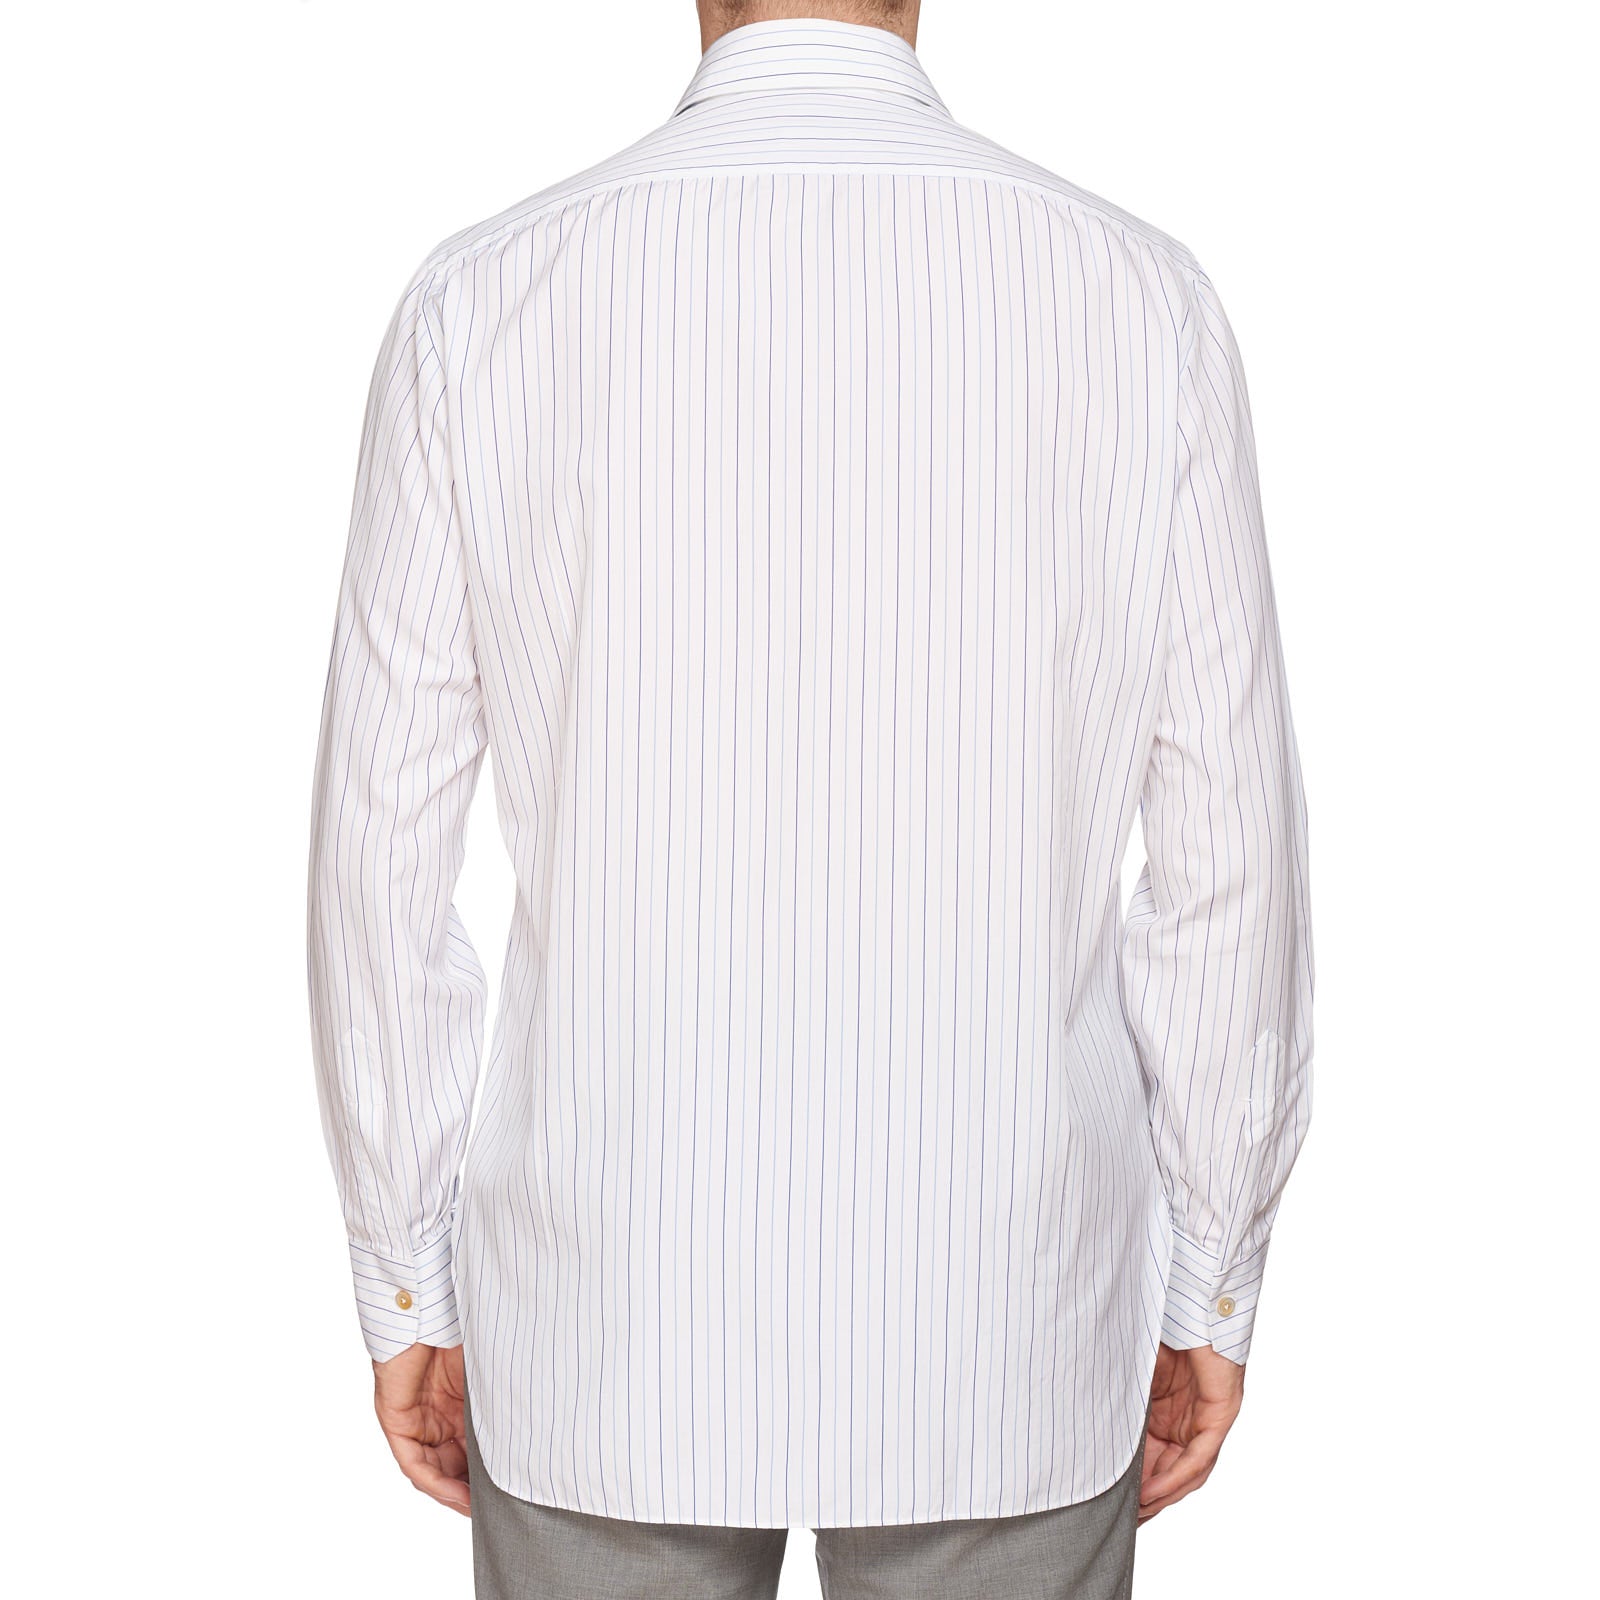 KITON Napoli Handmade Blue Striped Poplin Cotton Dress Shirt EU 39 NEW US 15.5 KITON